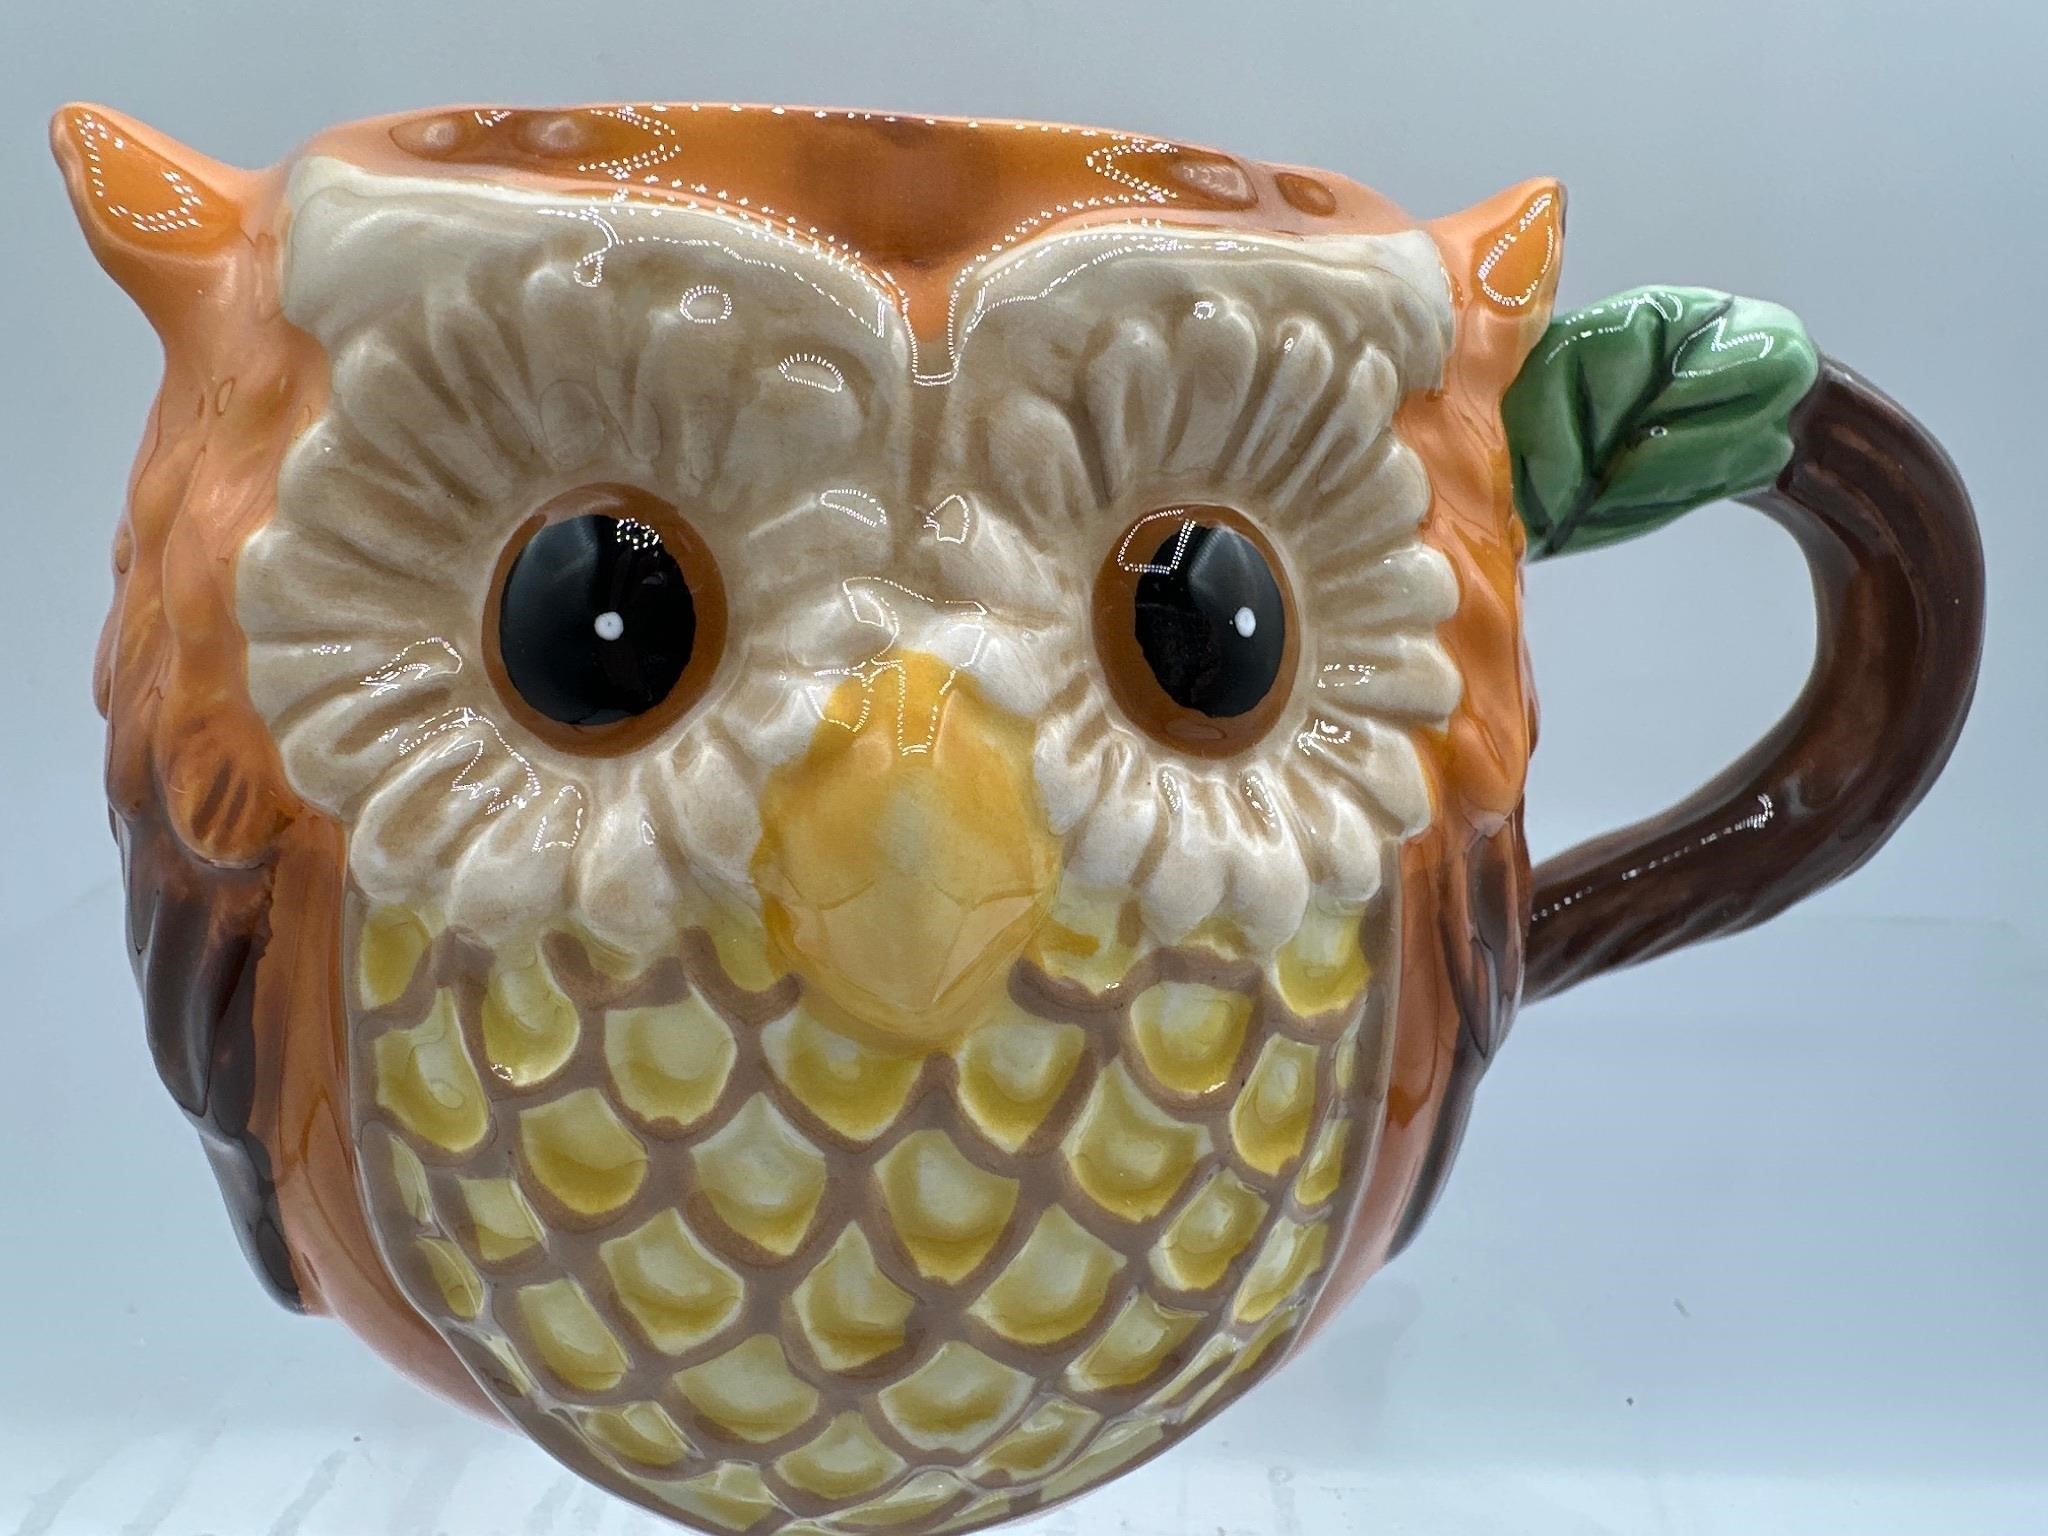 Cracker Barrel stoneware owl mug